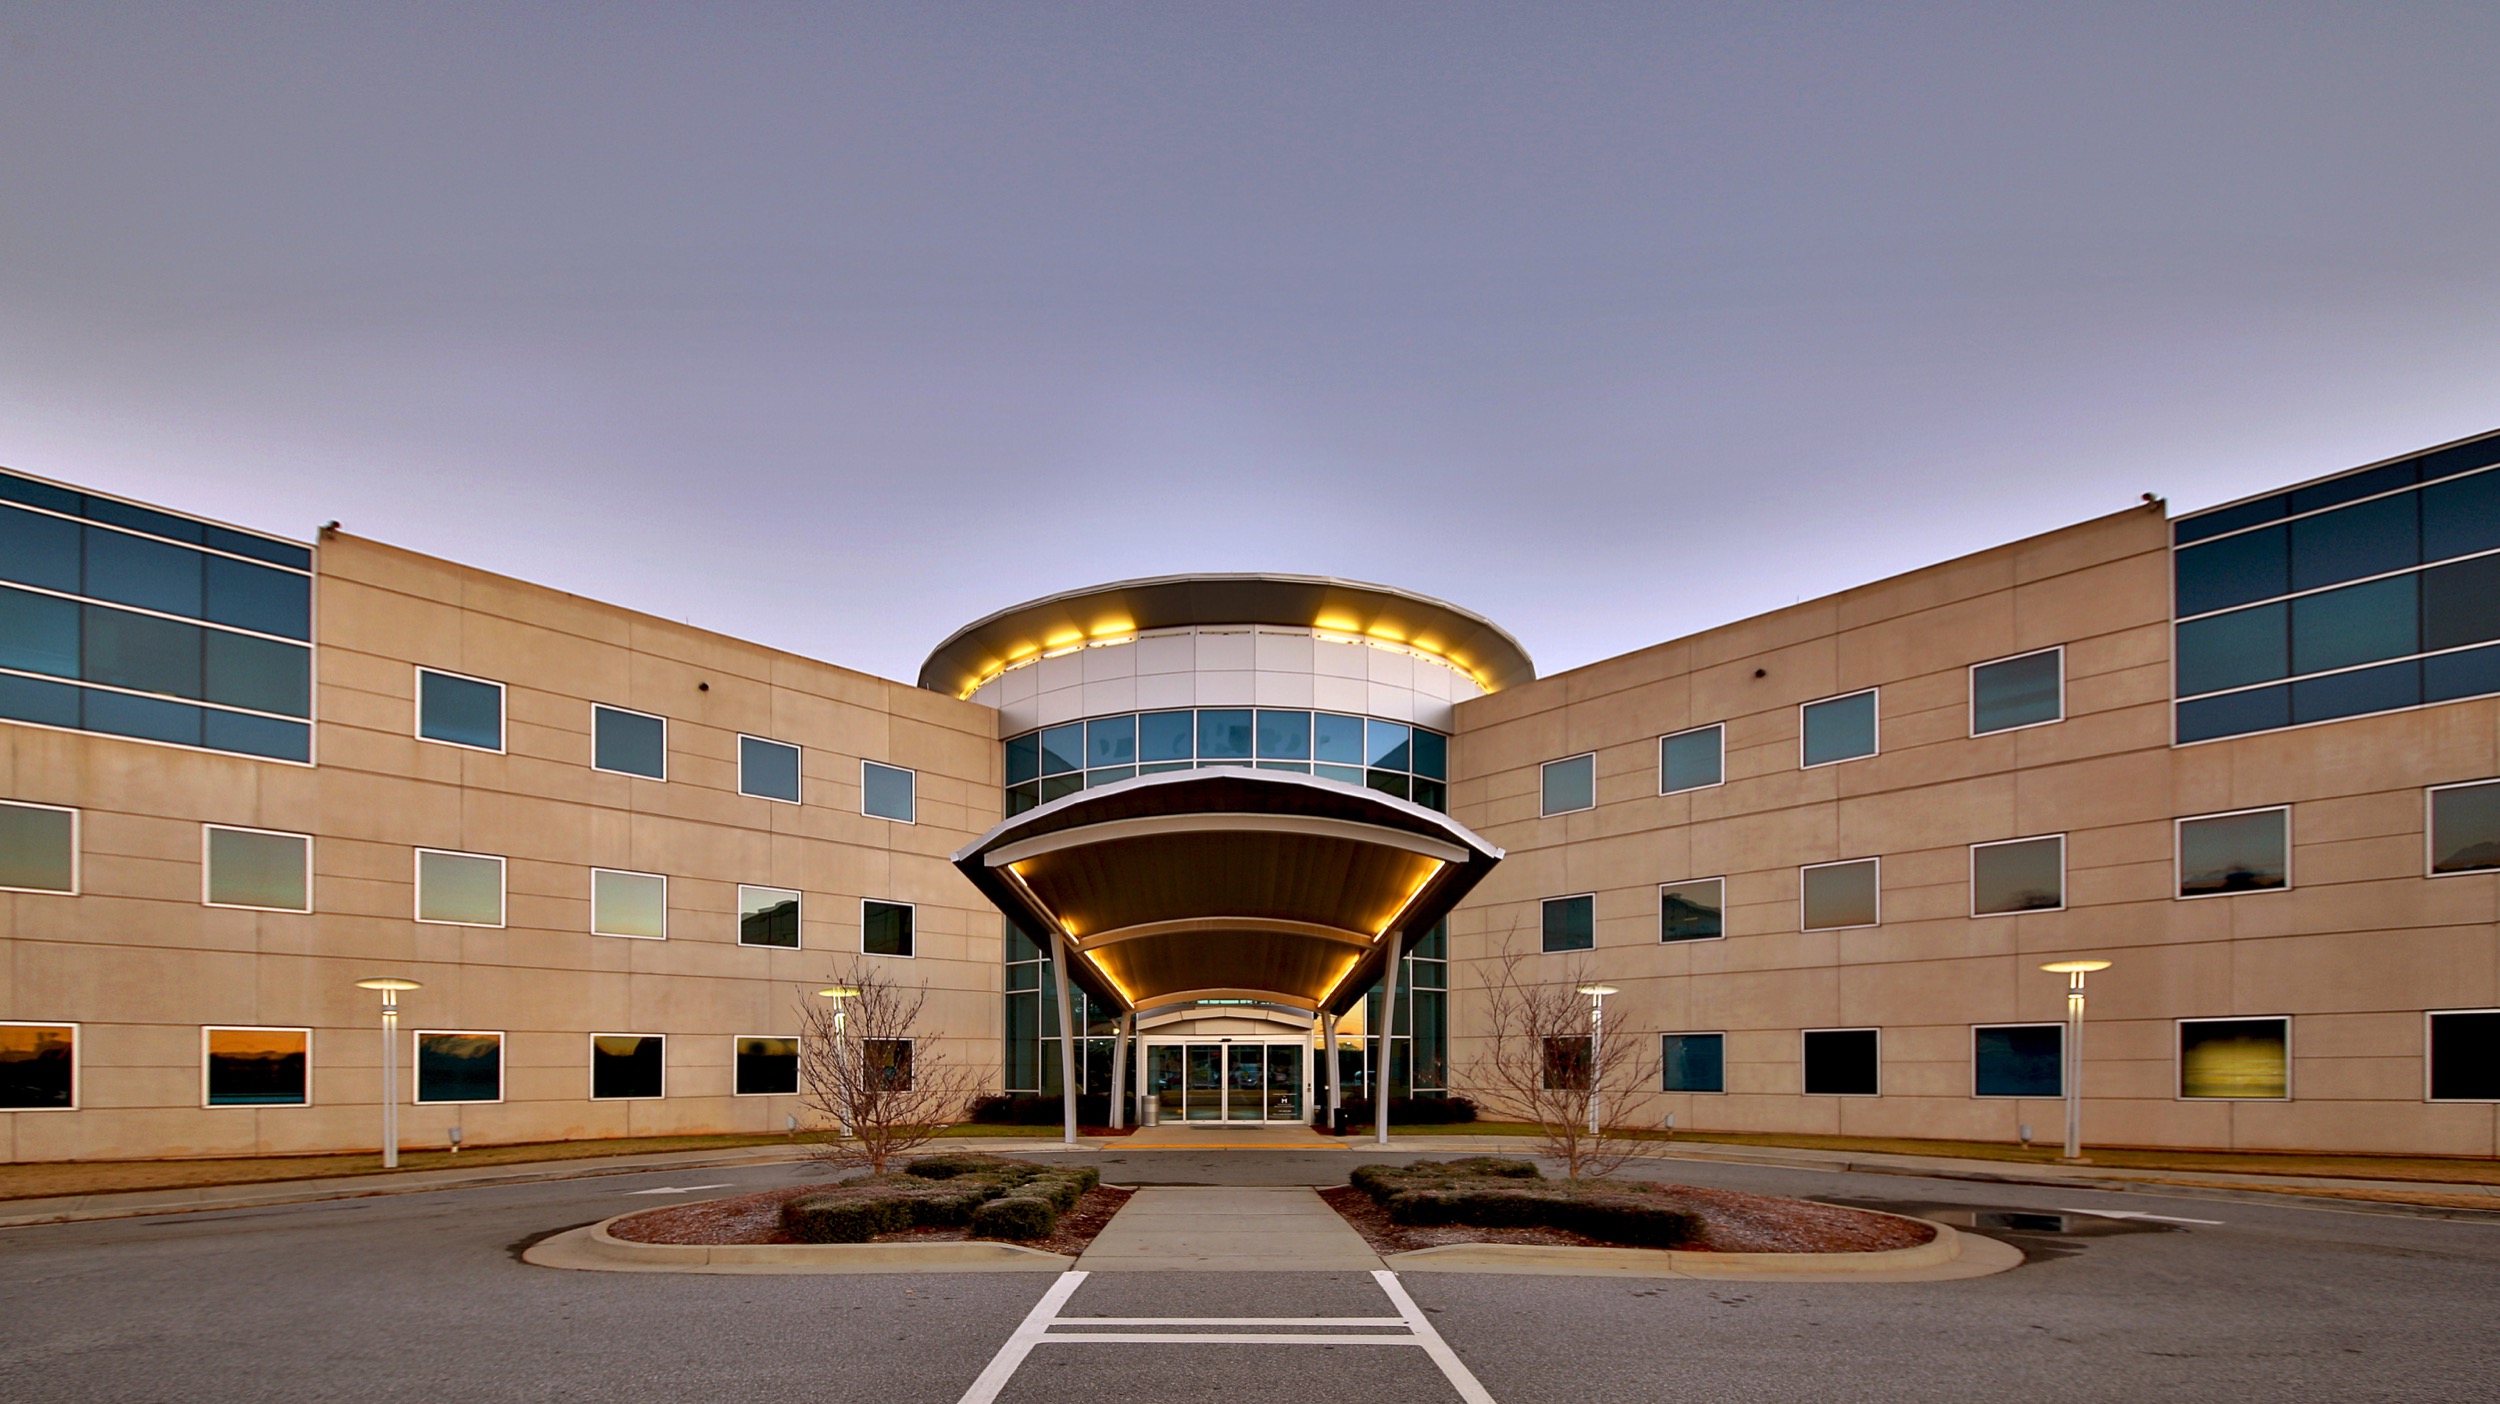 Terrace Park Medical Center Building - Remedy Medical Properties